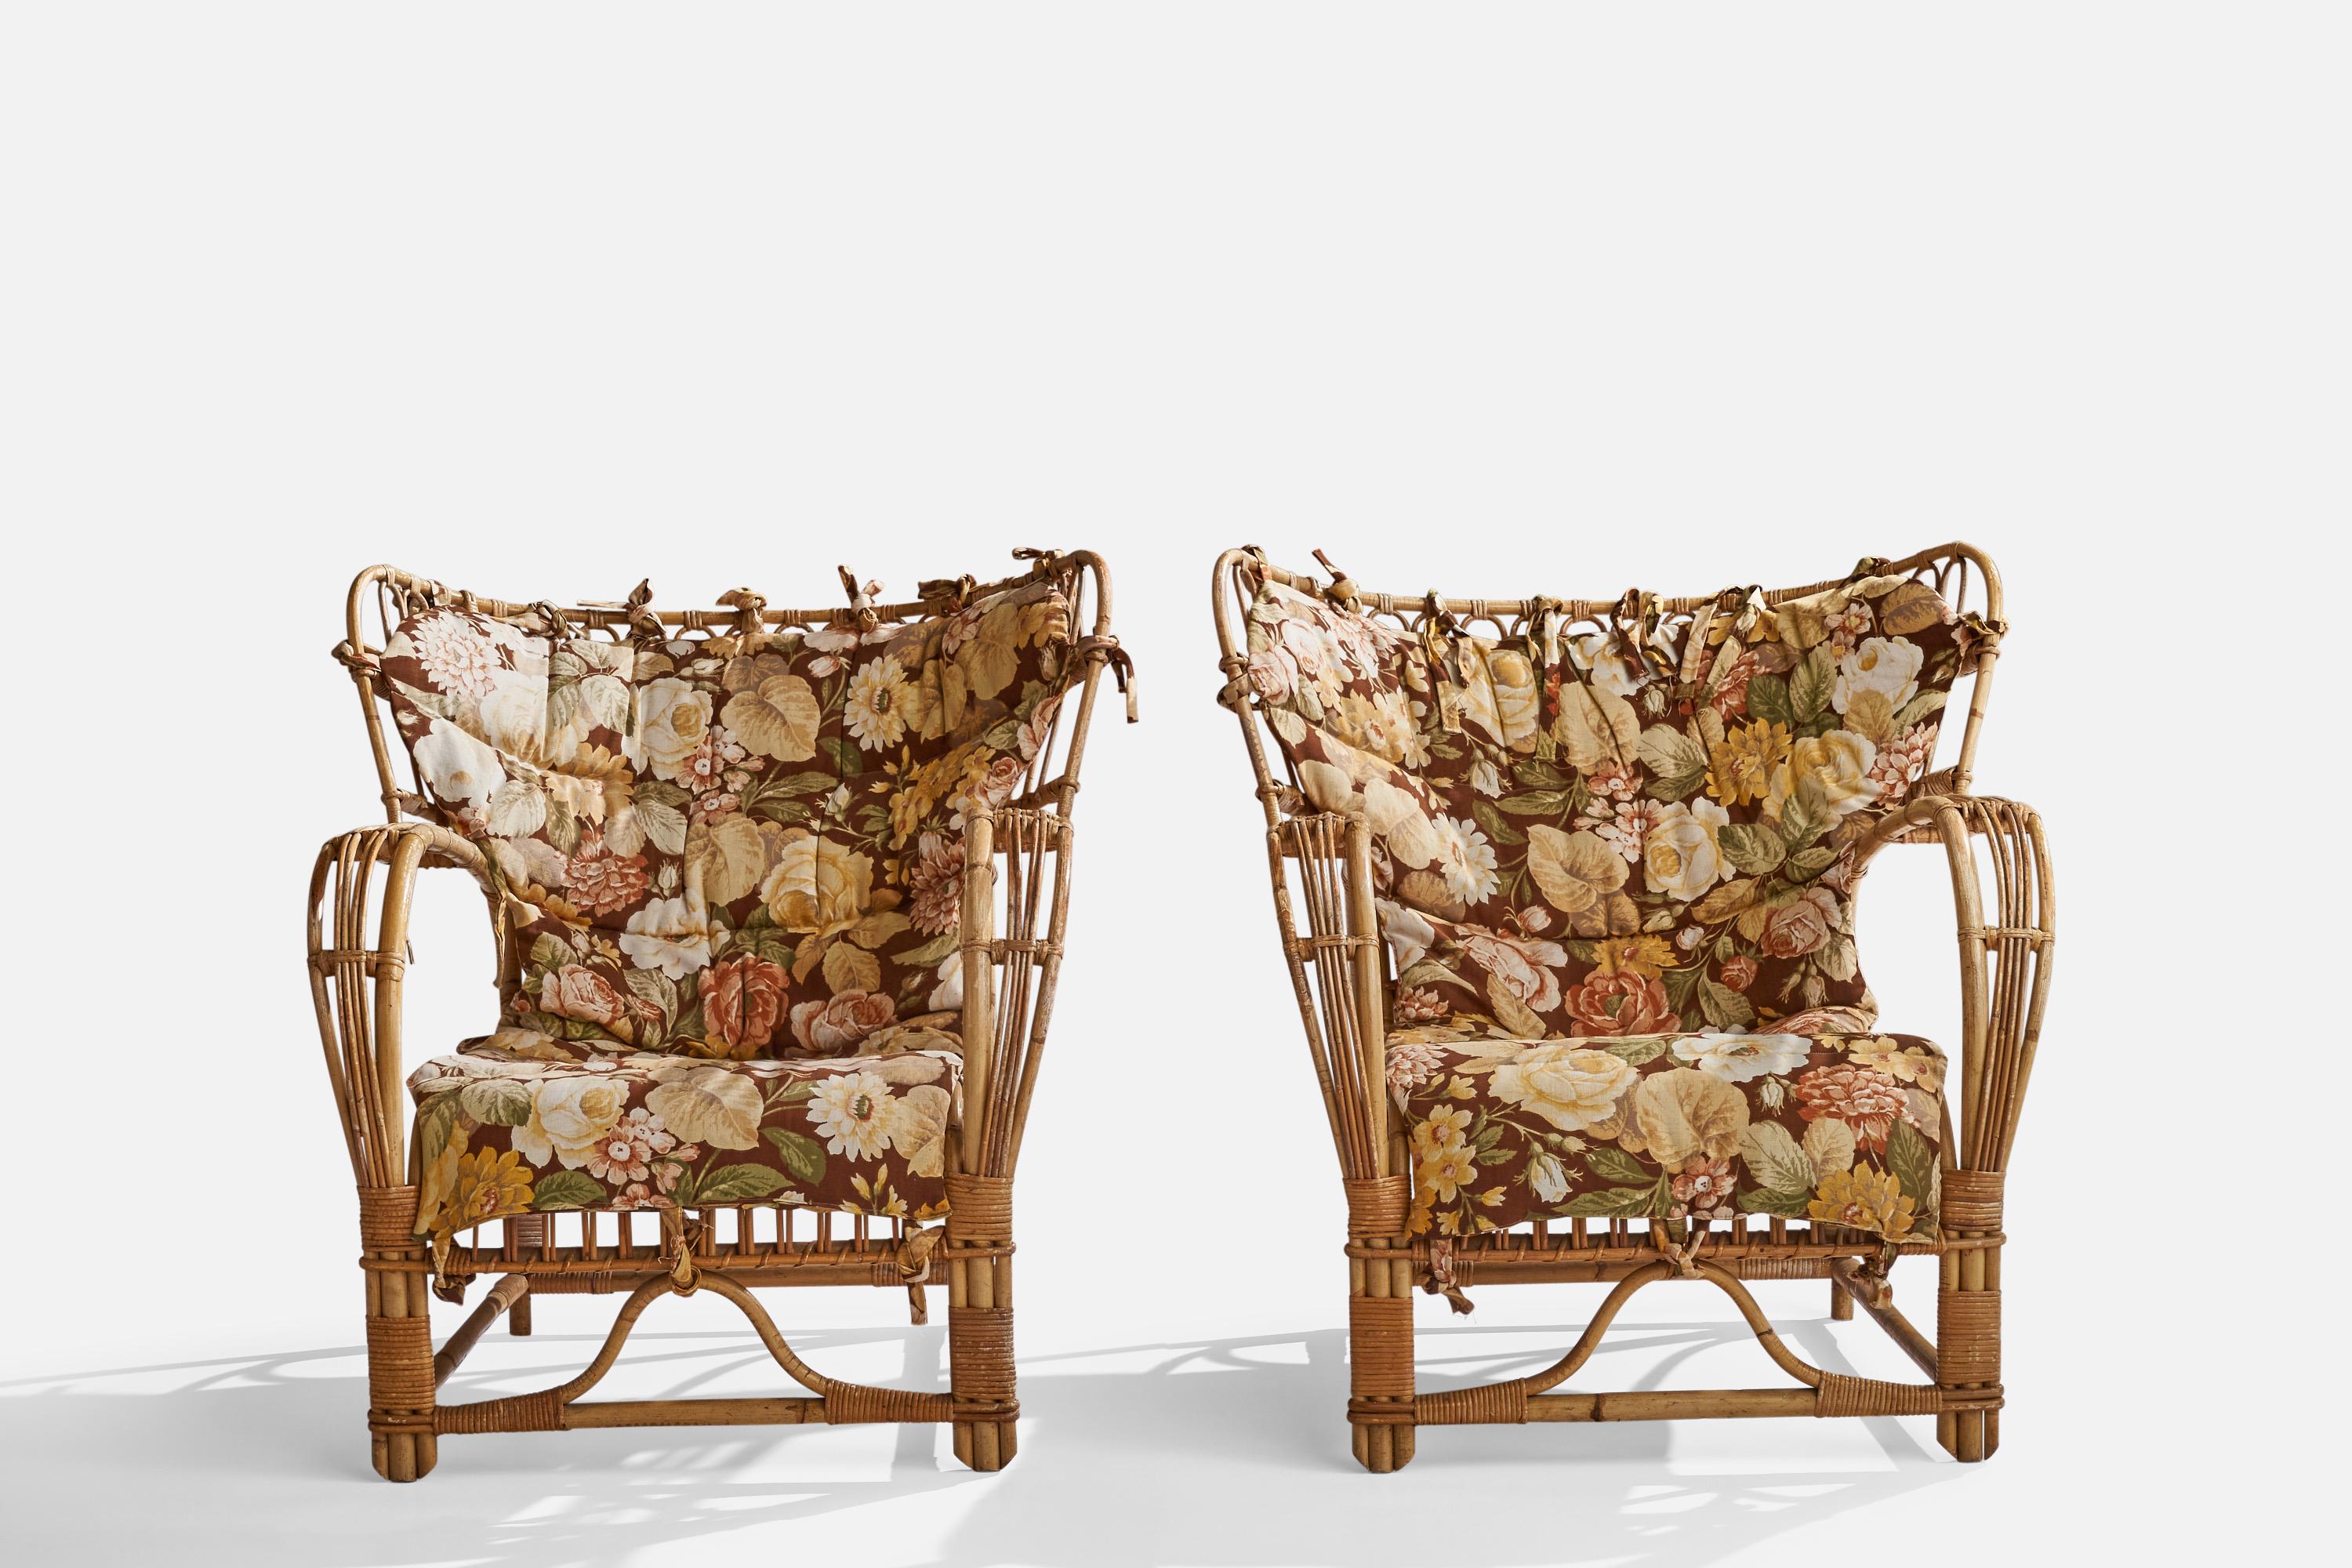 Swedish Viggo Boesen, Lounge Chairs, Bamboo, Rattan, Fabric, Sweden, 1940s For Sale